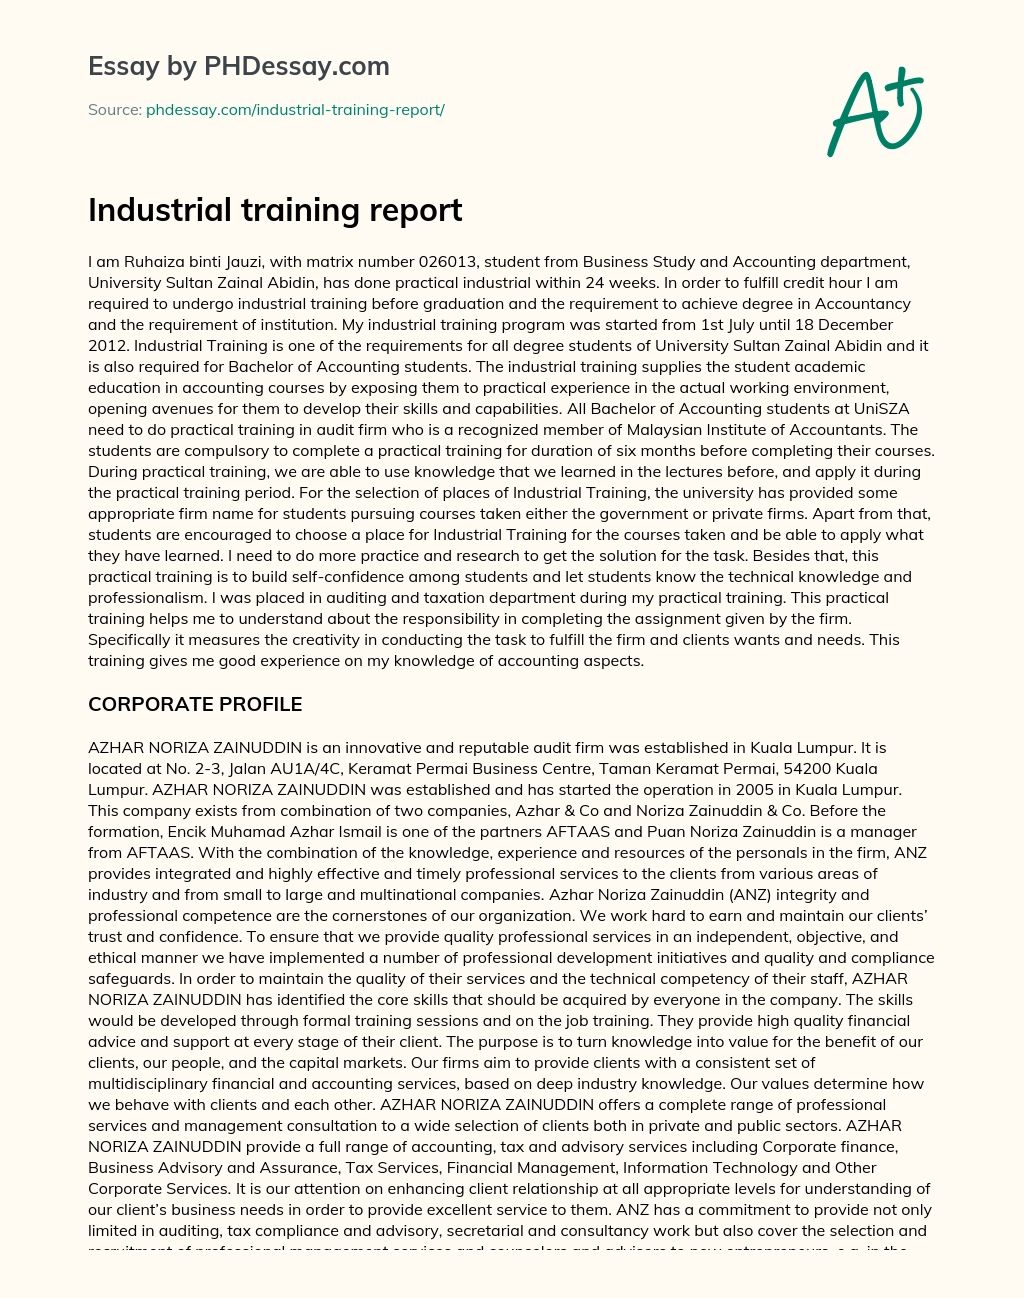 Industrial training report essay